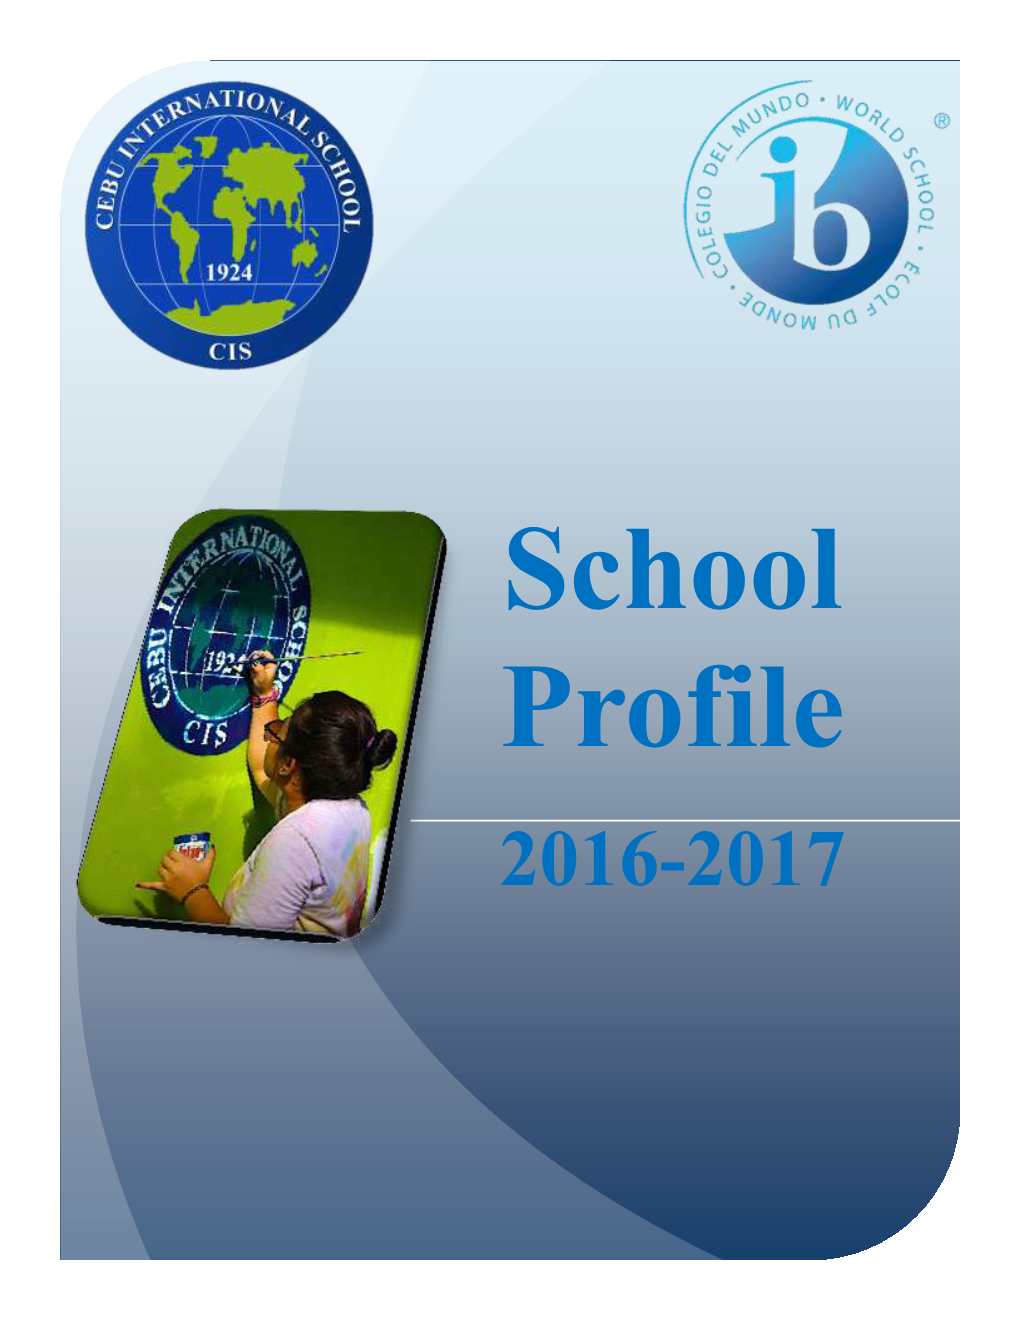 Cebu International School CEEB CODE: 705230 IB SCHOOL CODE: 1165